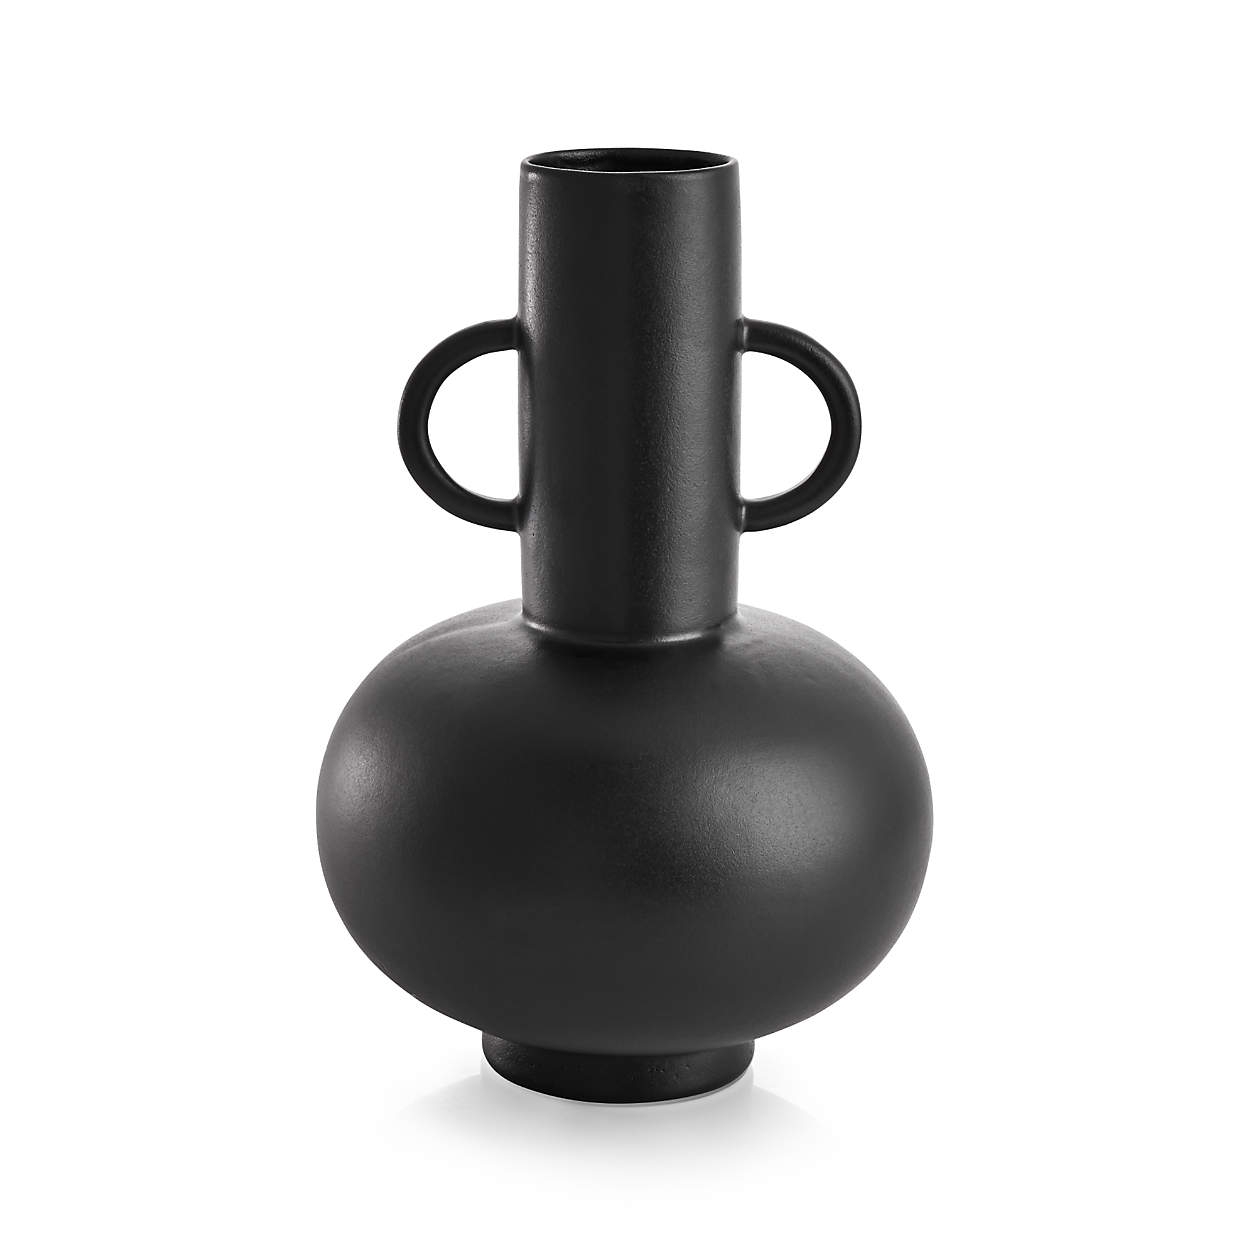 Merriman Black Vase by Leanne Ford - Image 0